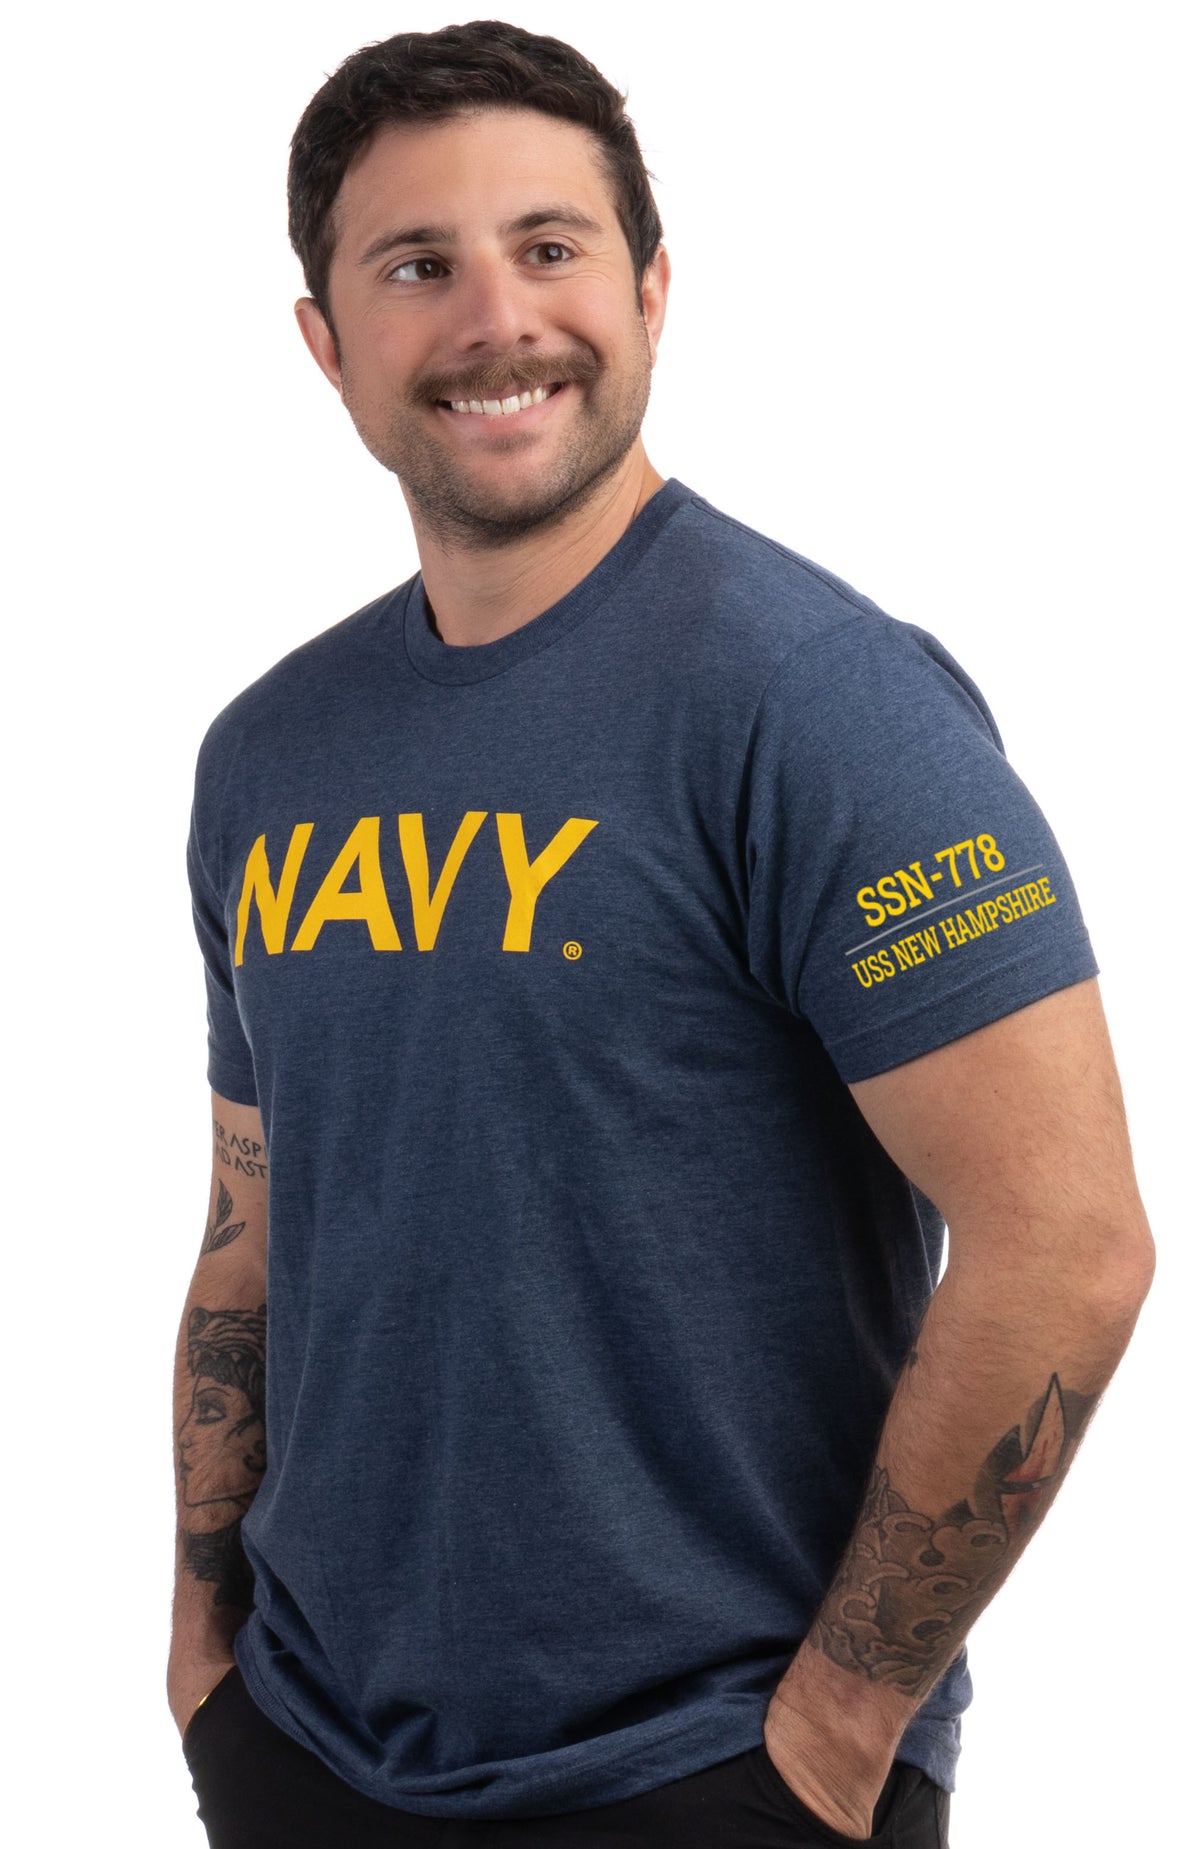 USS New Hampshire, SSN-778 | U.S. Navy Sailor Veteran USN United States Naval T-shirt for Men Women